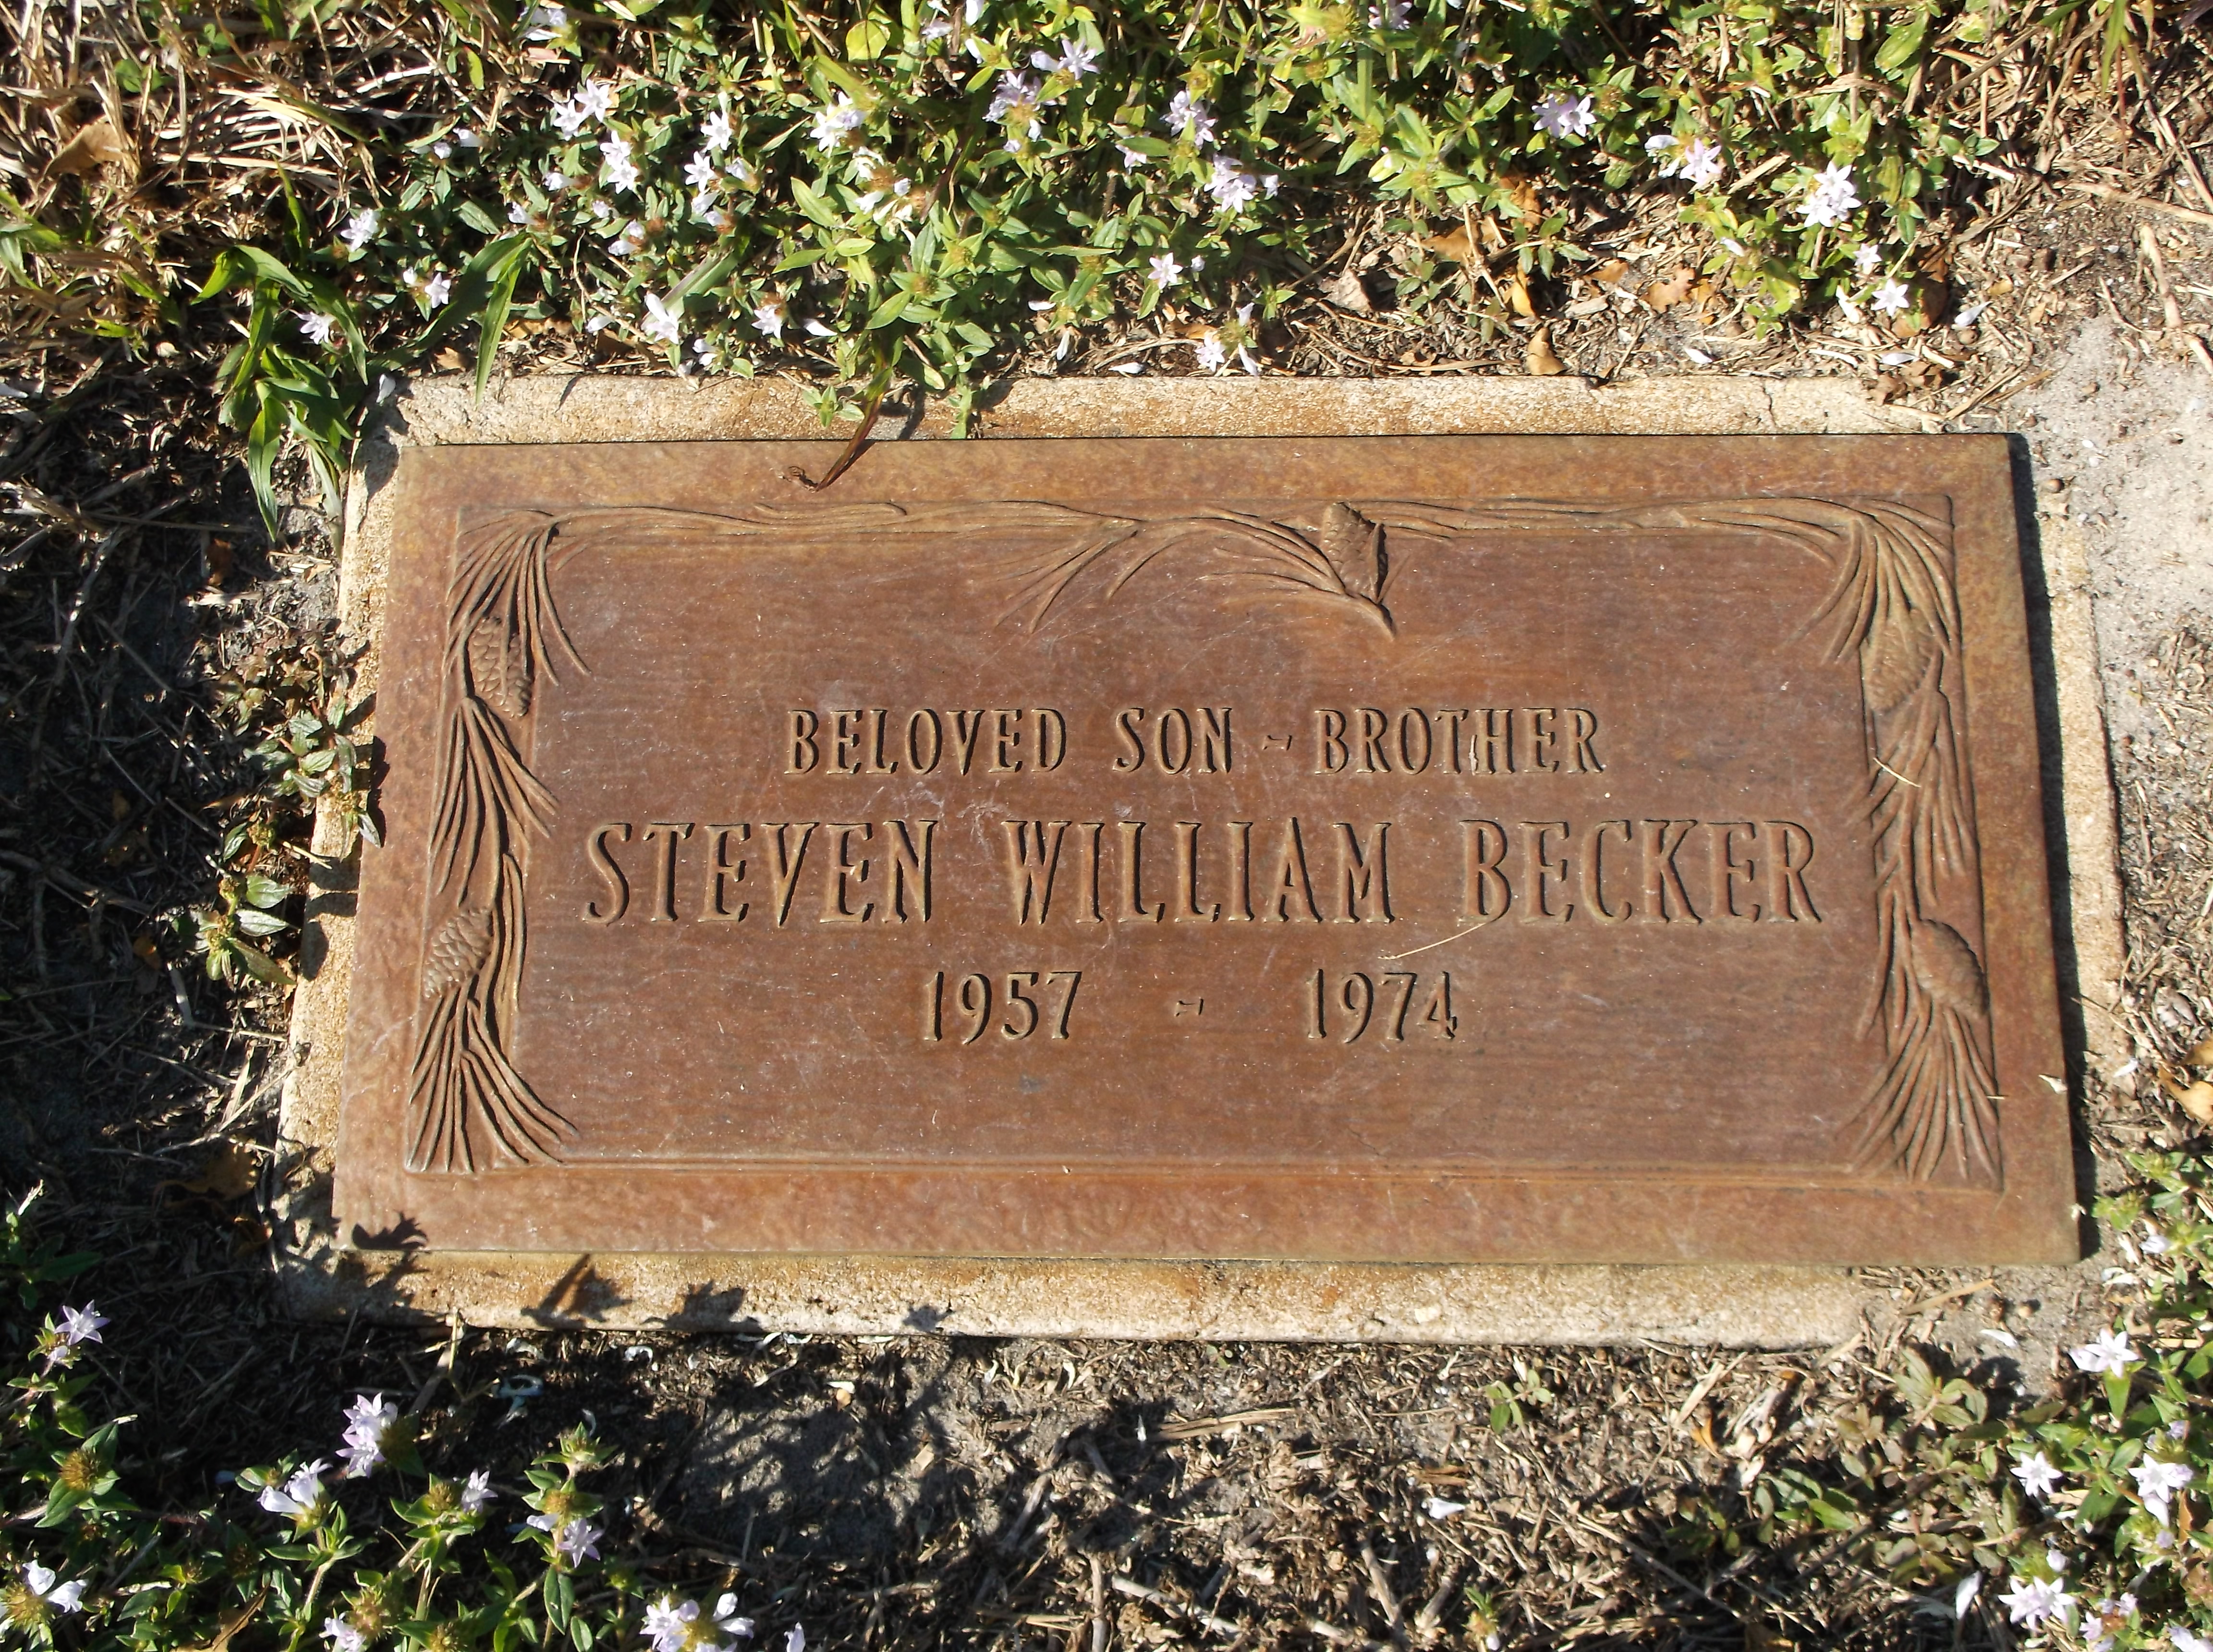 Steven William Becker